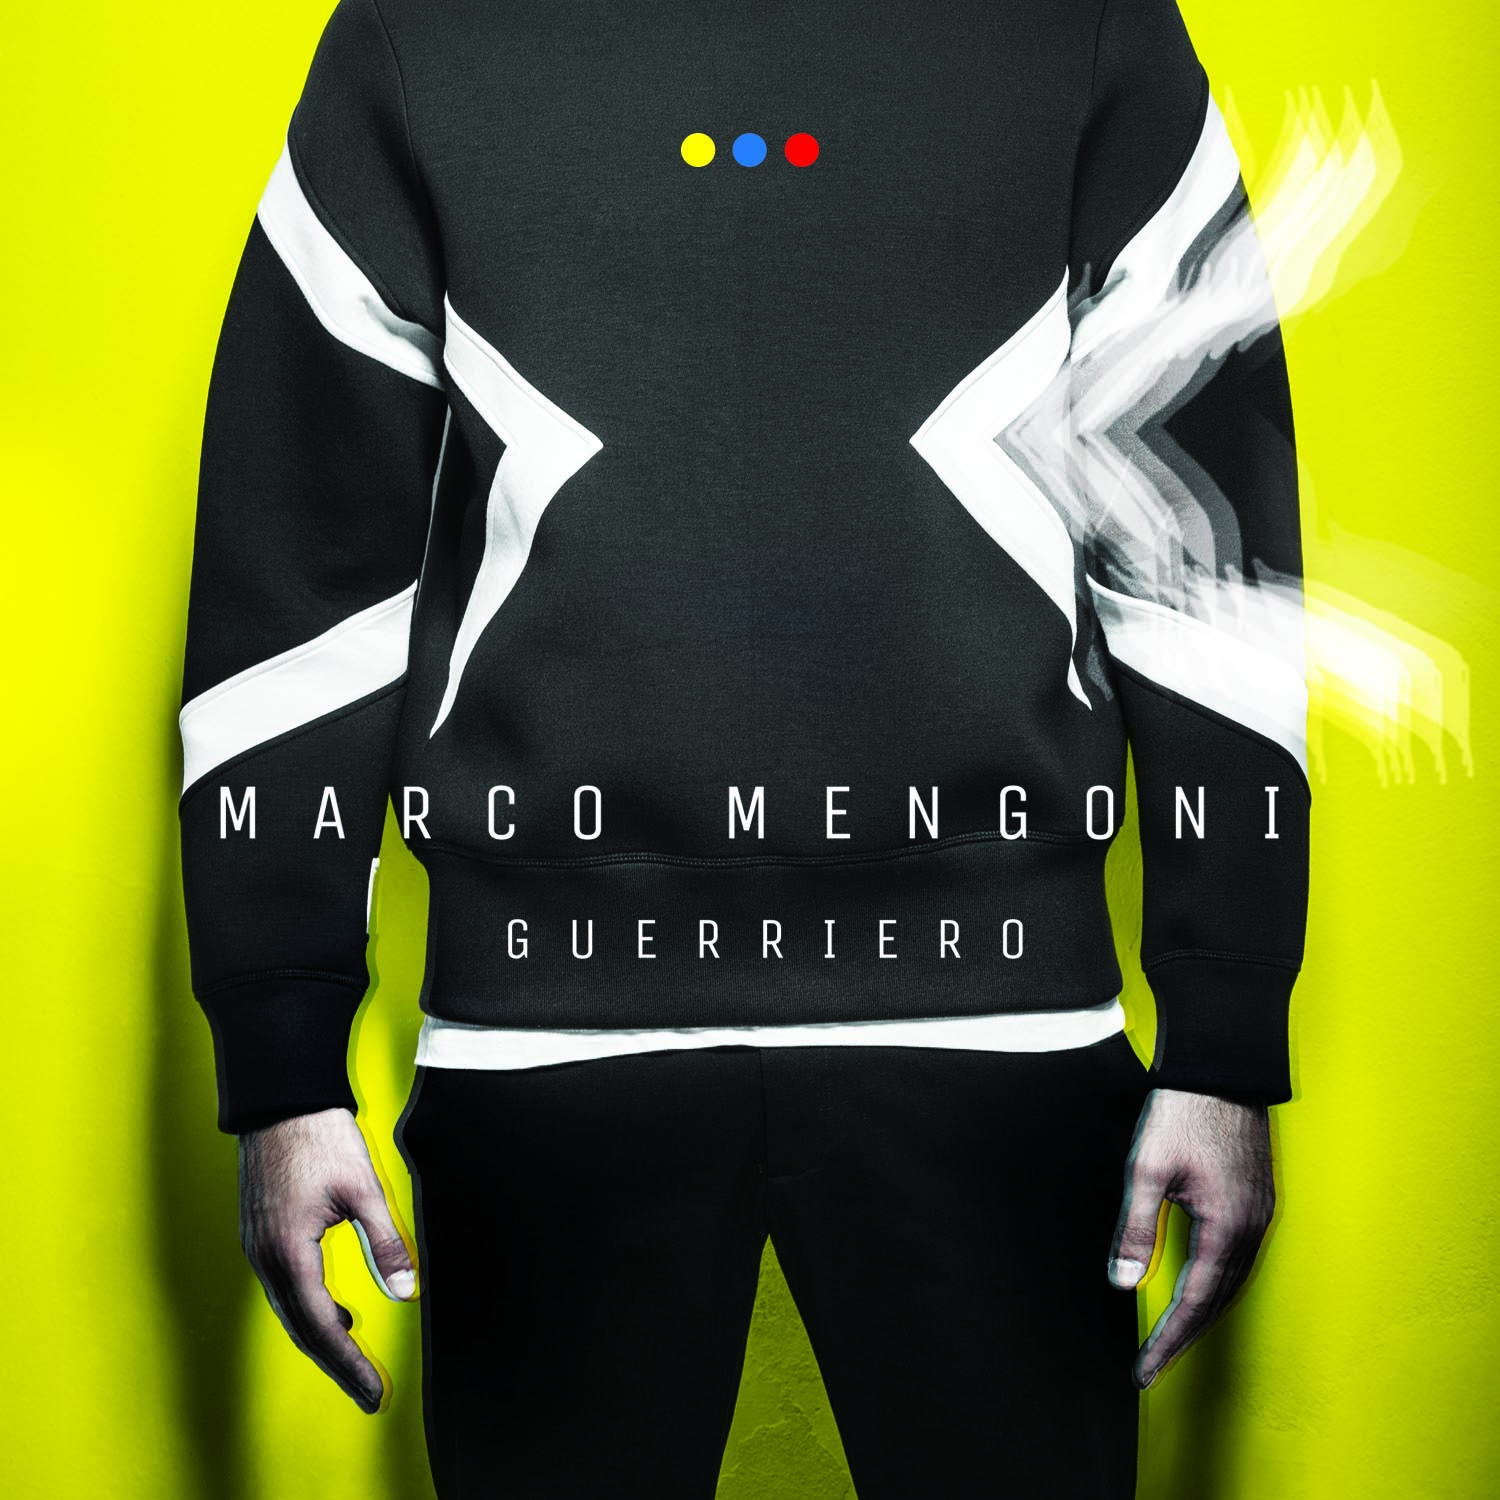 Marco Mengoni cover singolo